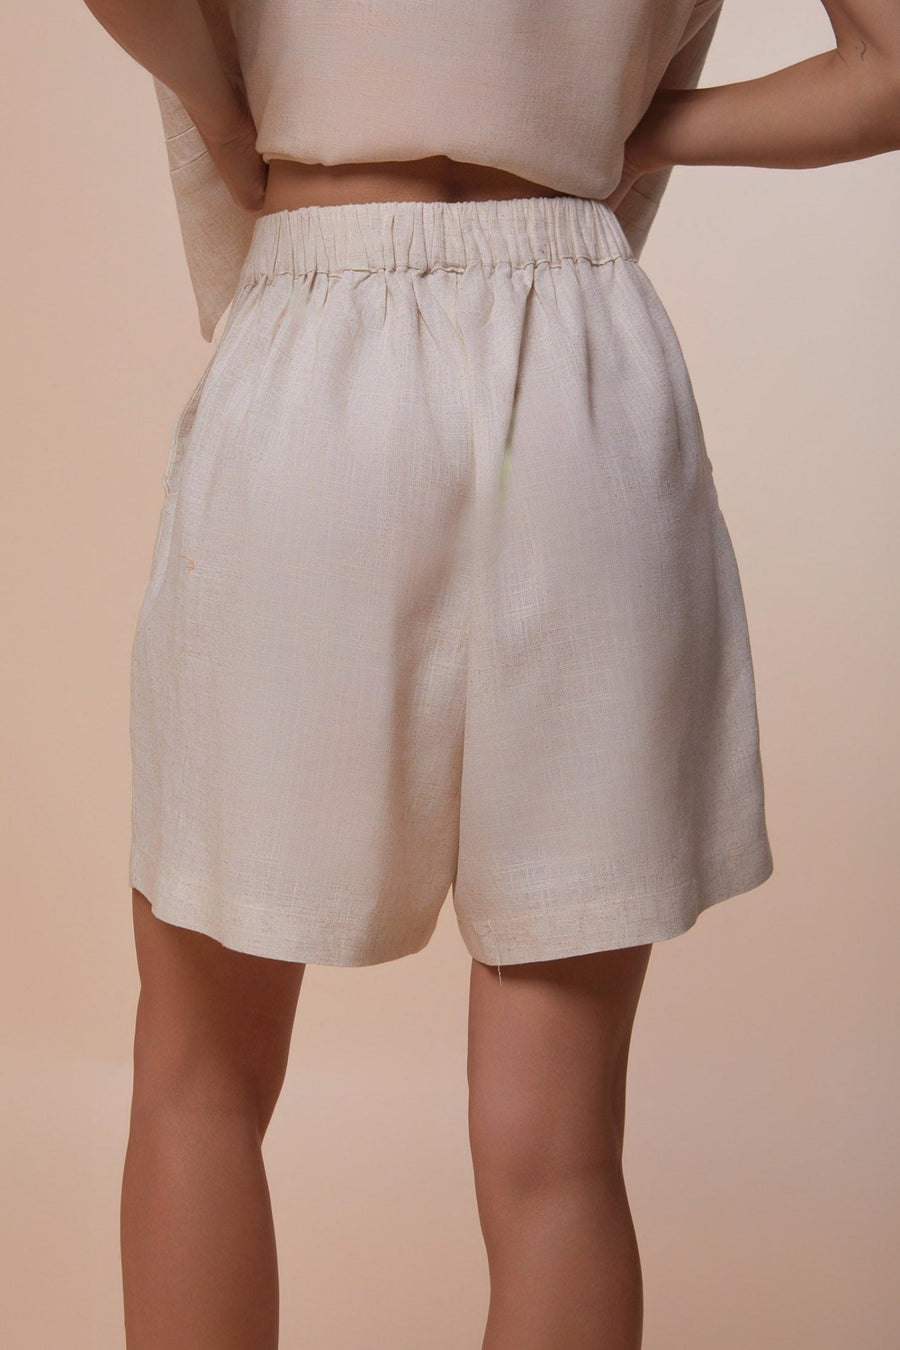 Beige shorts - nahlaelalfydesigns